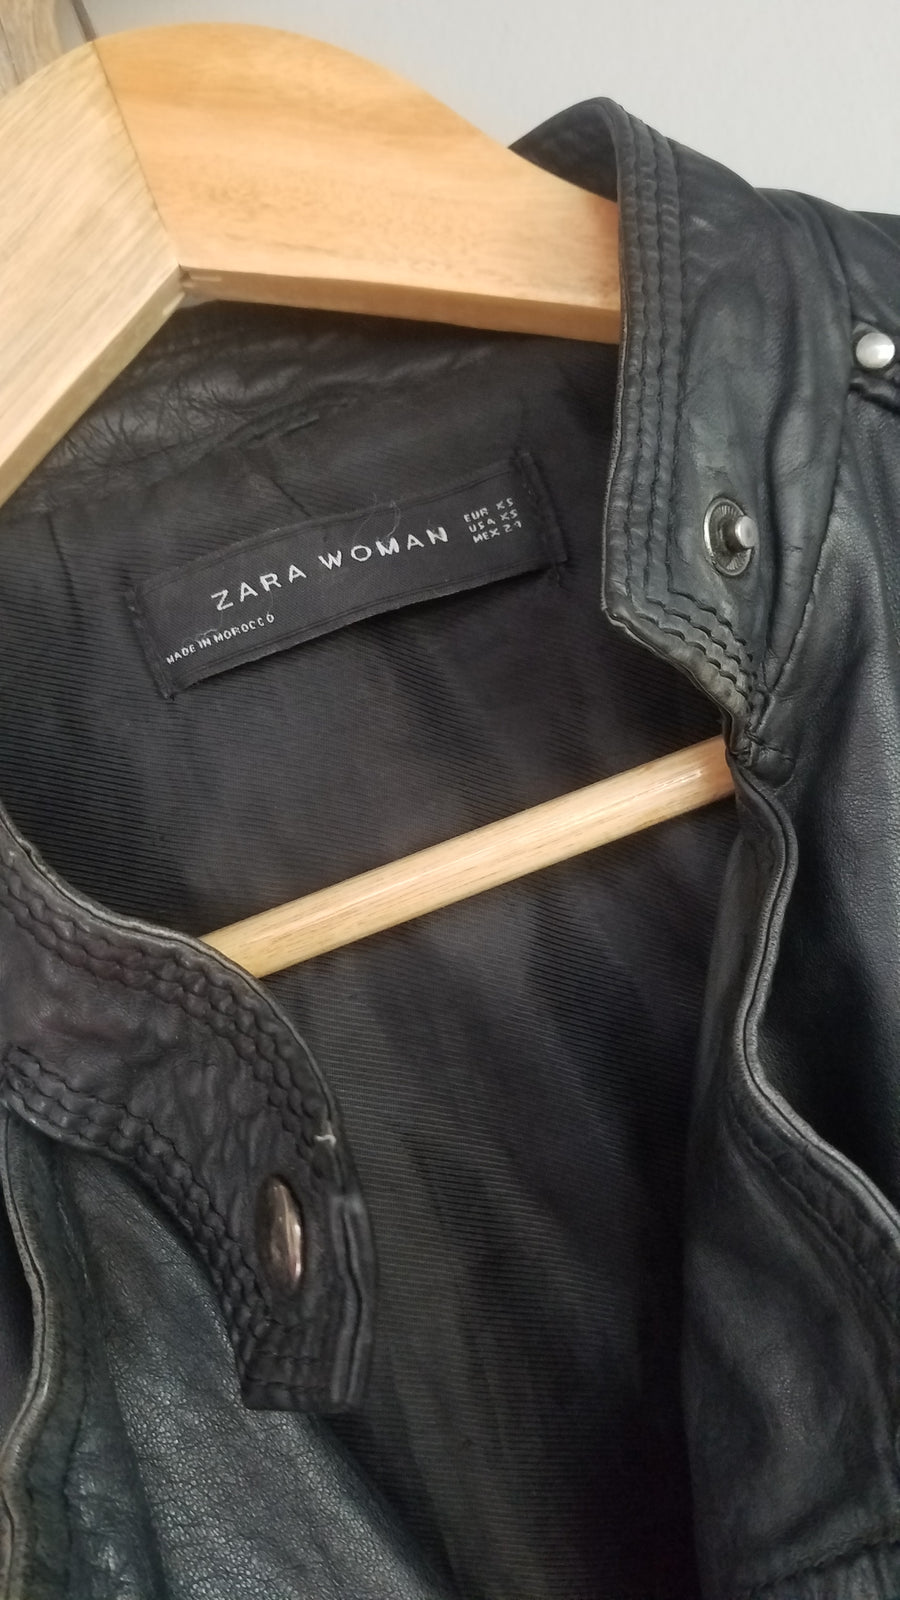 Genuine black Leather Jacket 8 - Devils the Angel